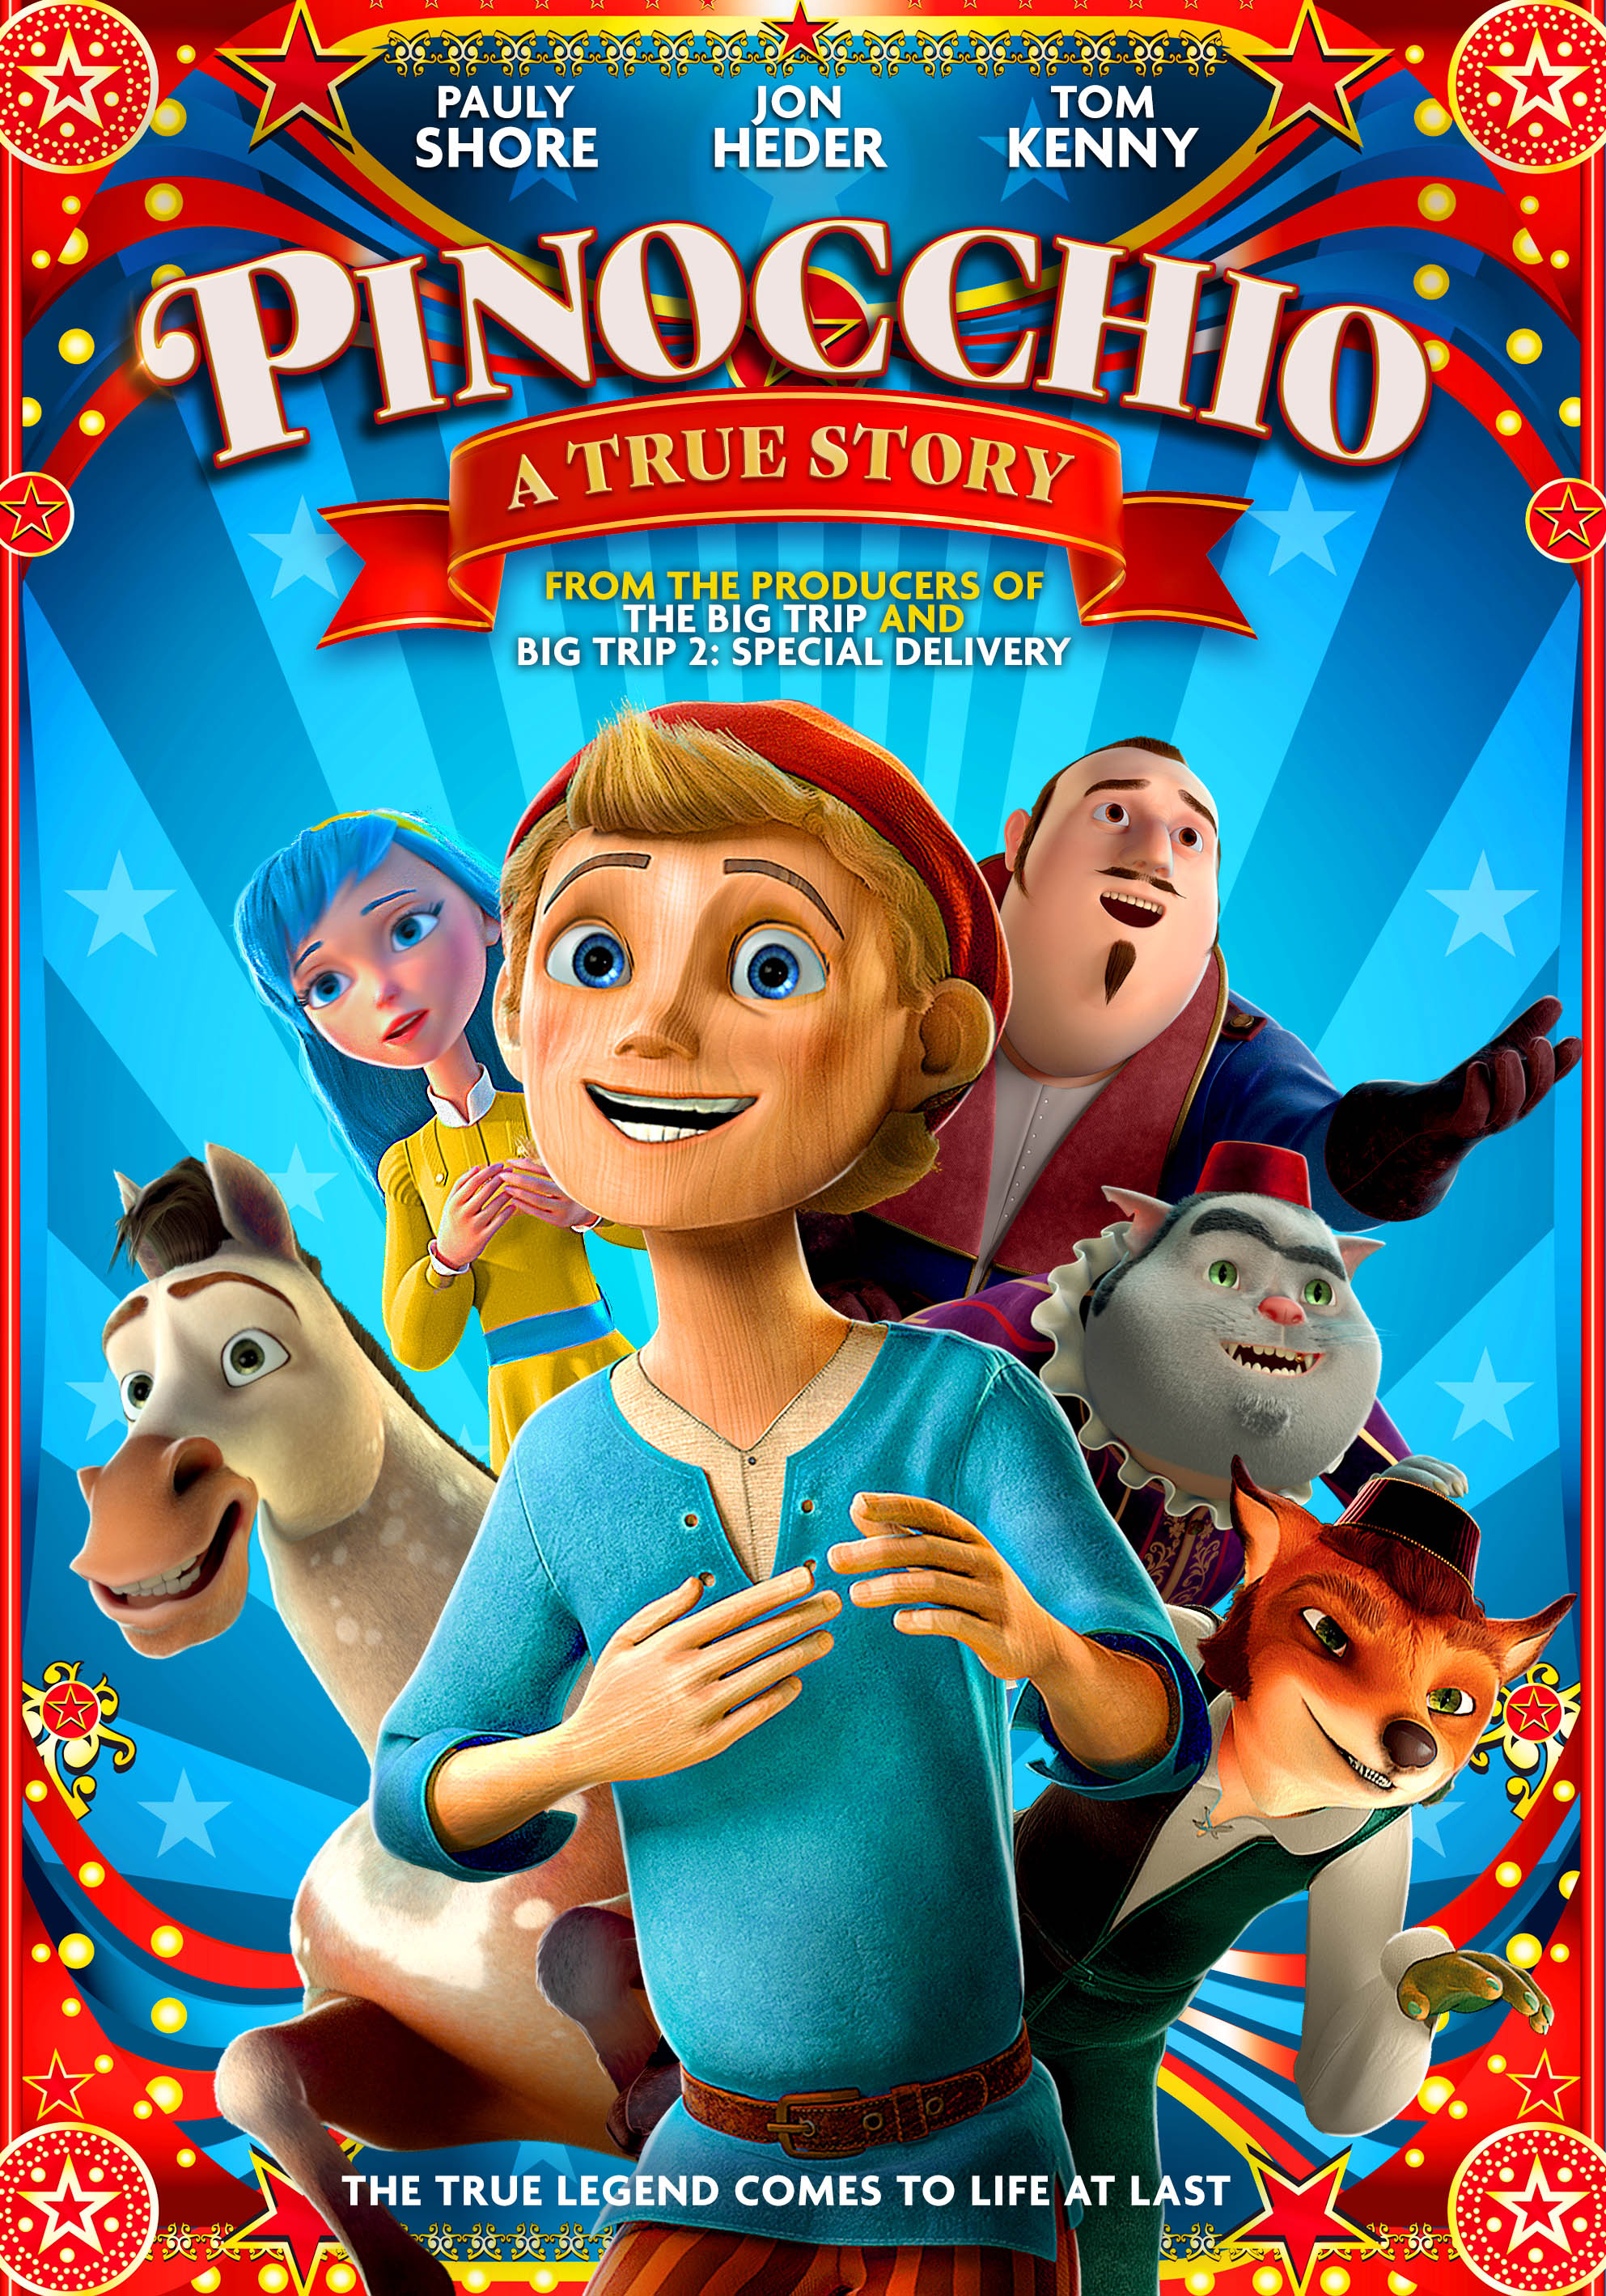 Pinocchio A True Story (2021) Hindi Dubbed (DD 5.1) & English [Dual Audio] WEB-Rip 1080p 720p 480p HD [Full Movie]